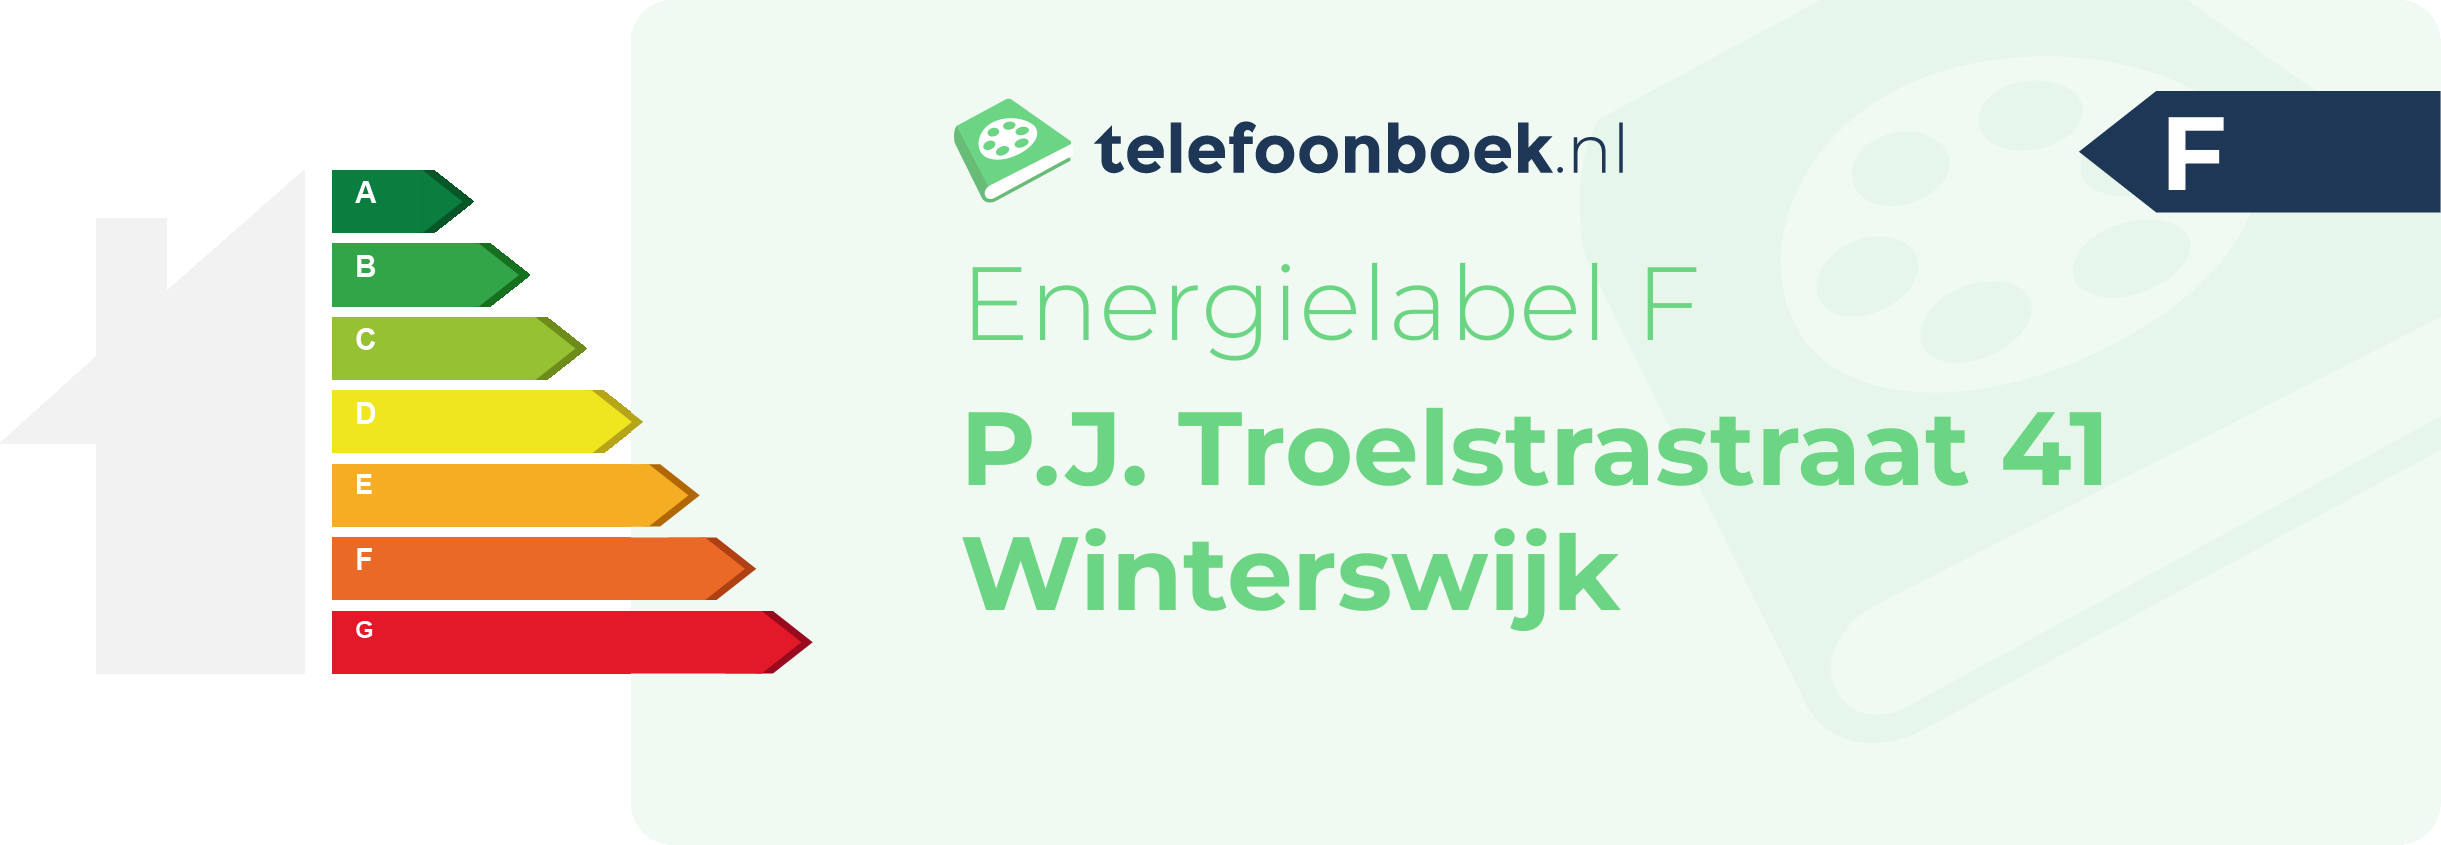 Energielabel P.J. Troelstrastraat 41 Winterswijk